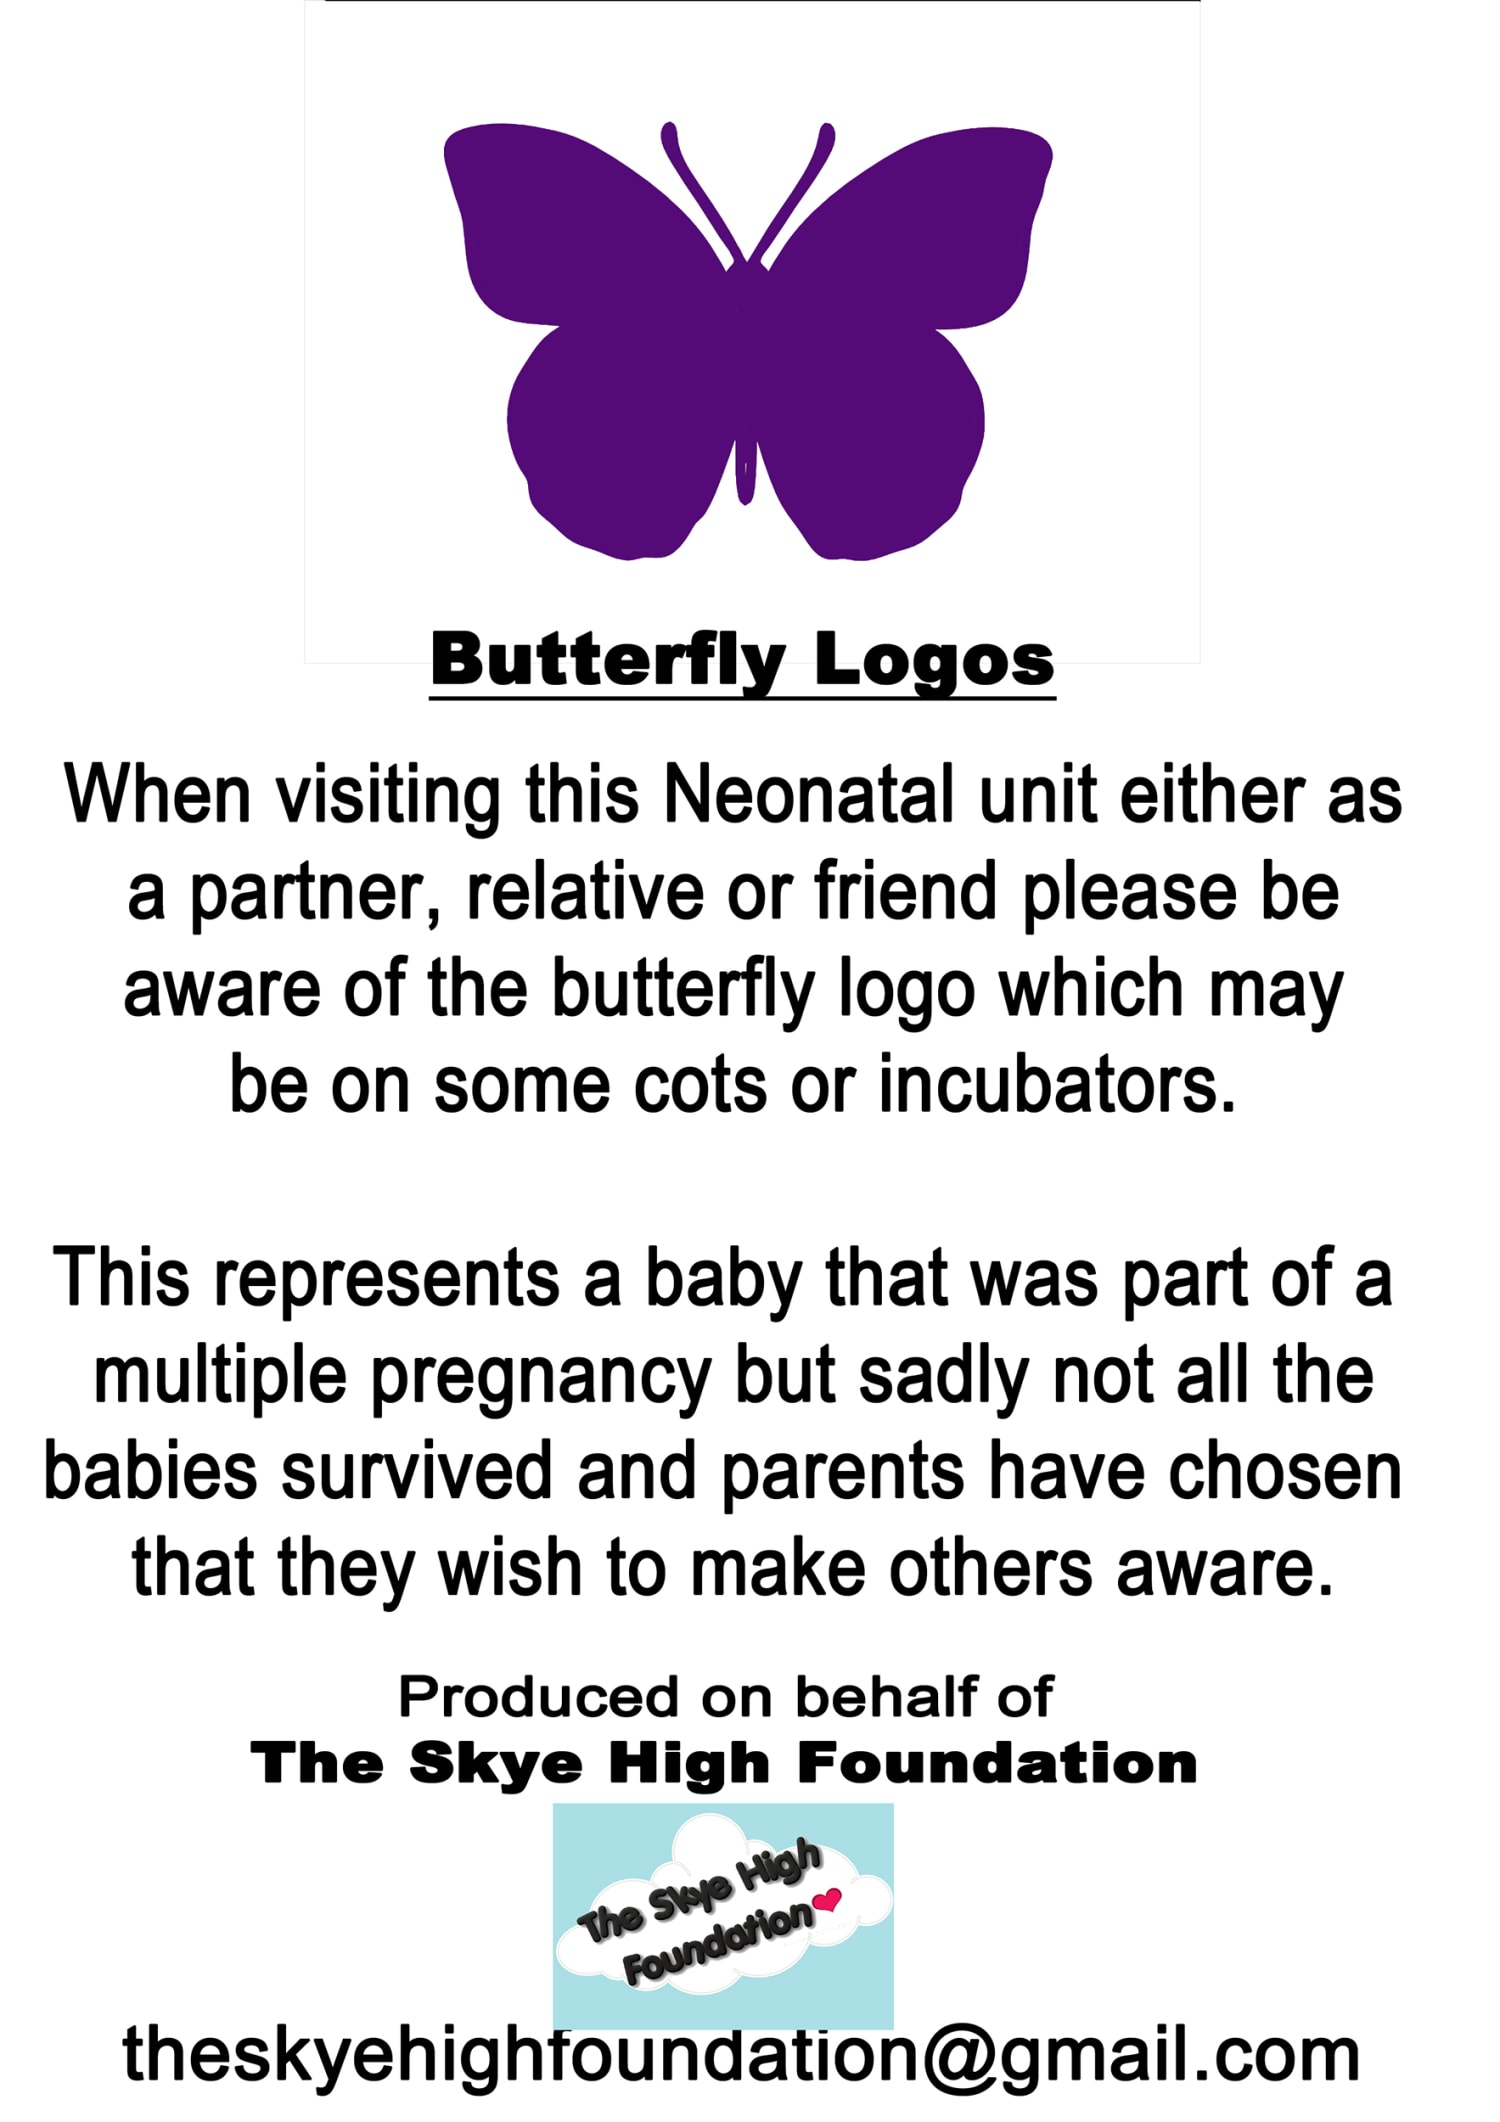 Purple butterfly meaning